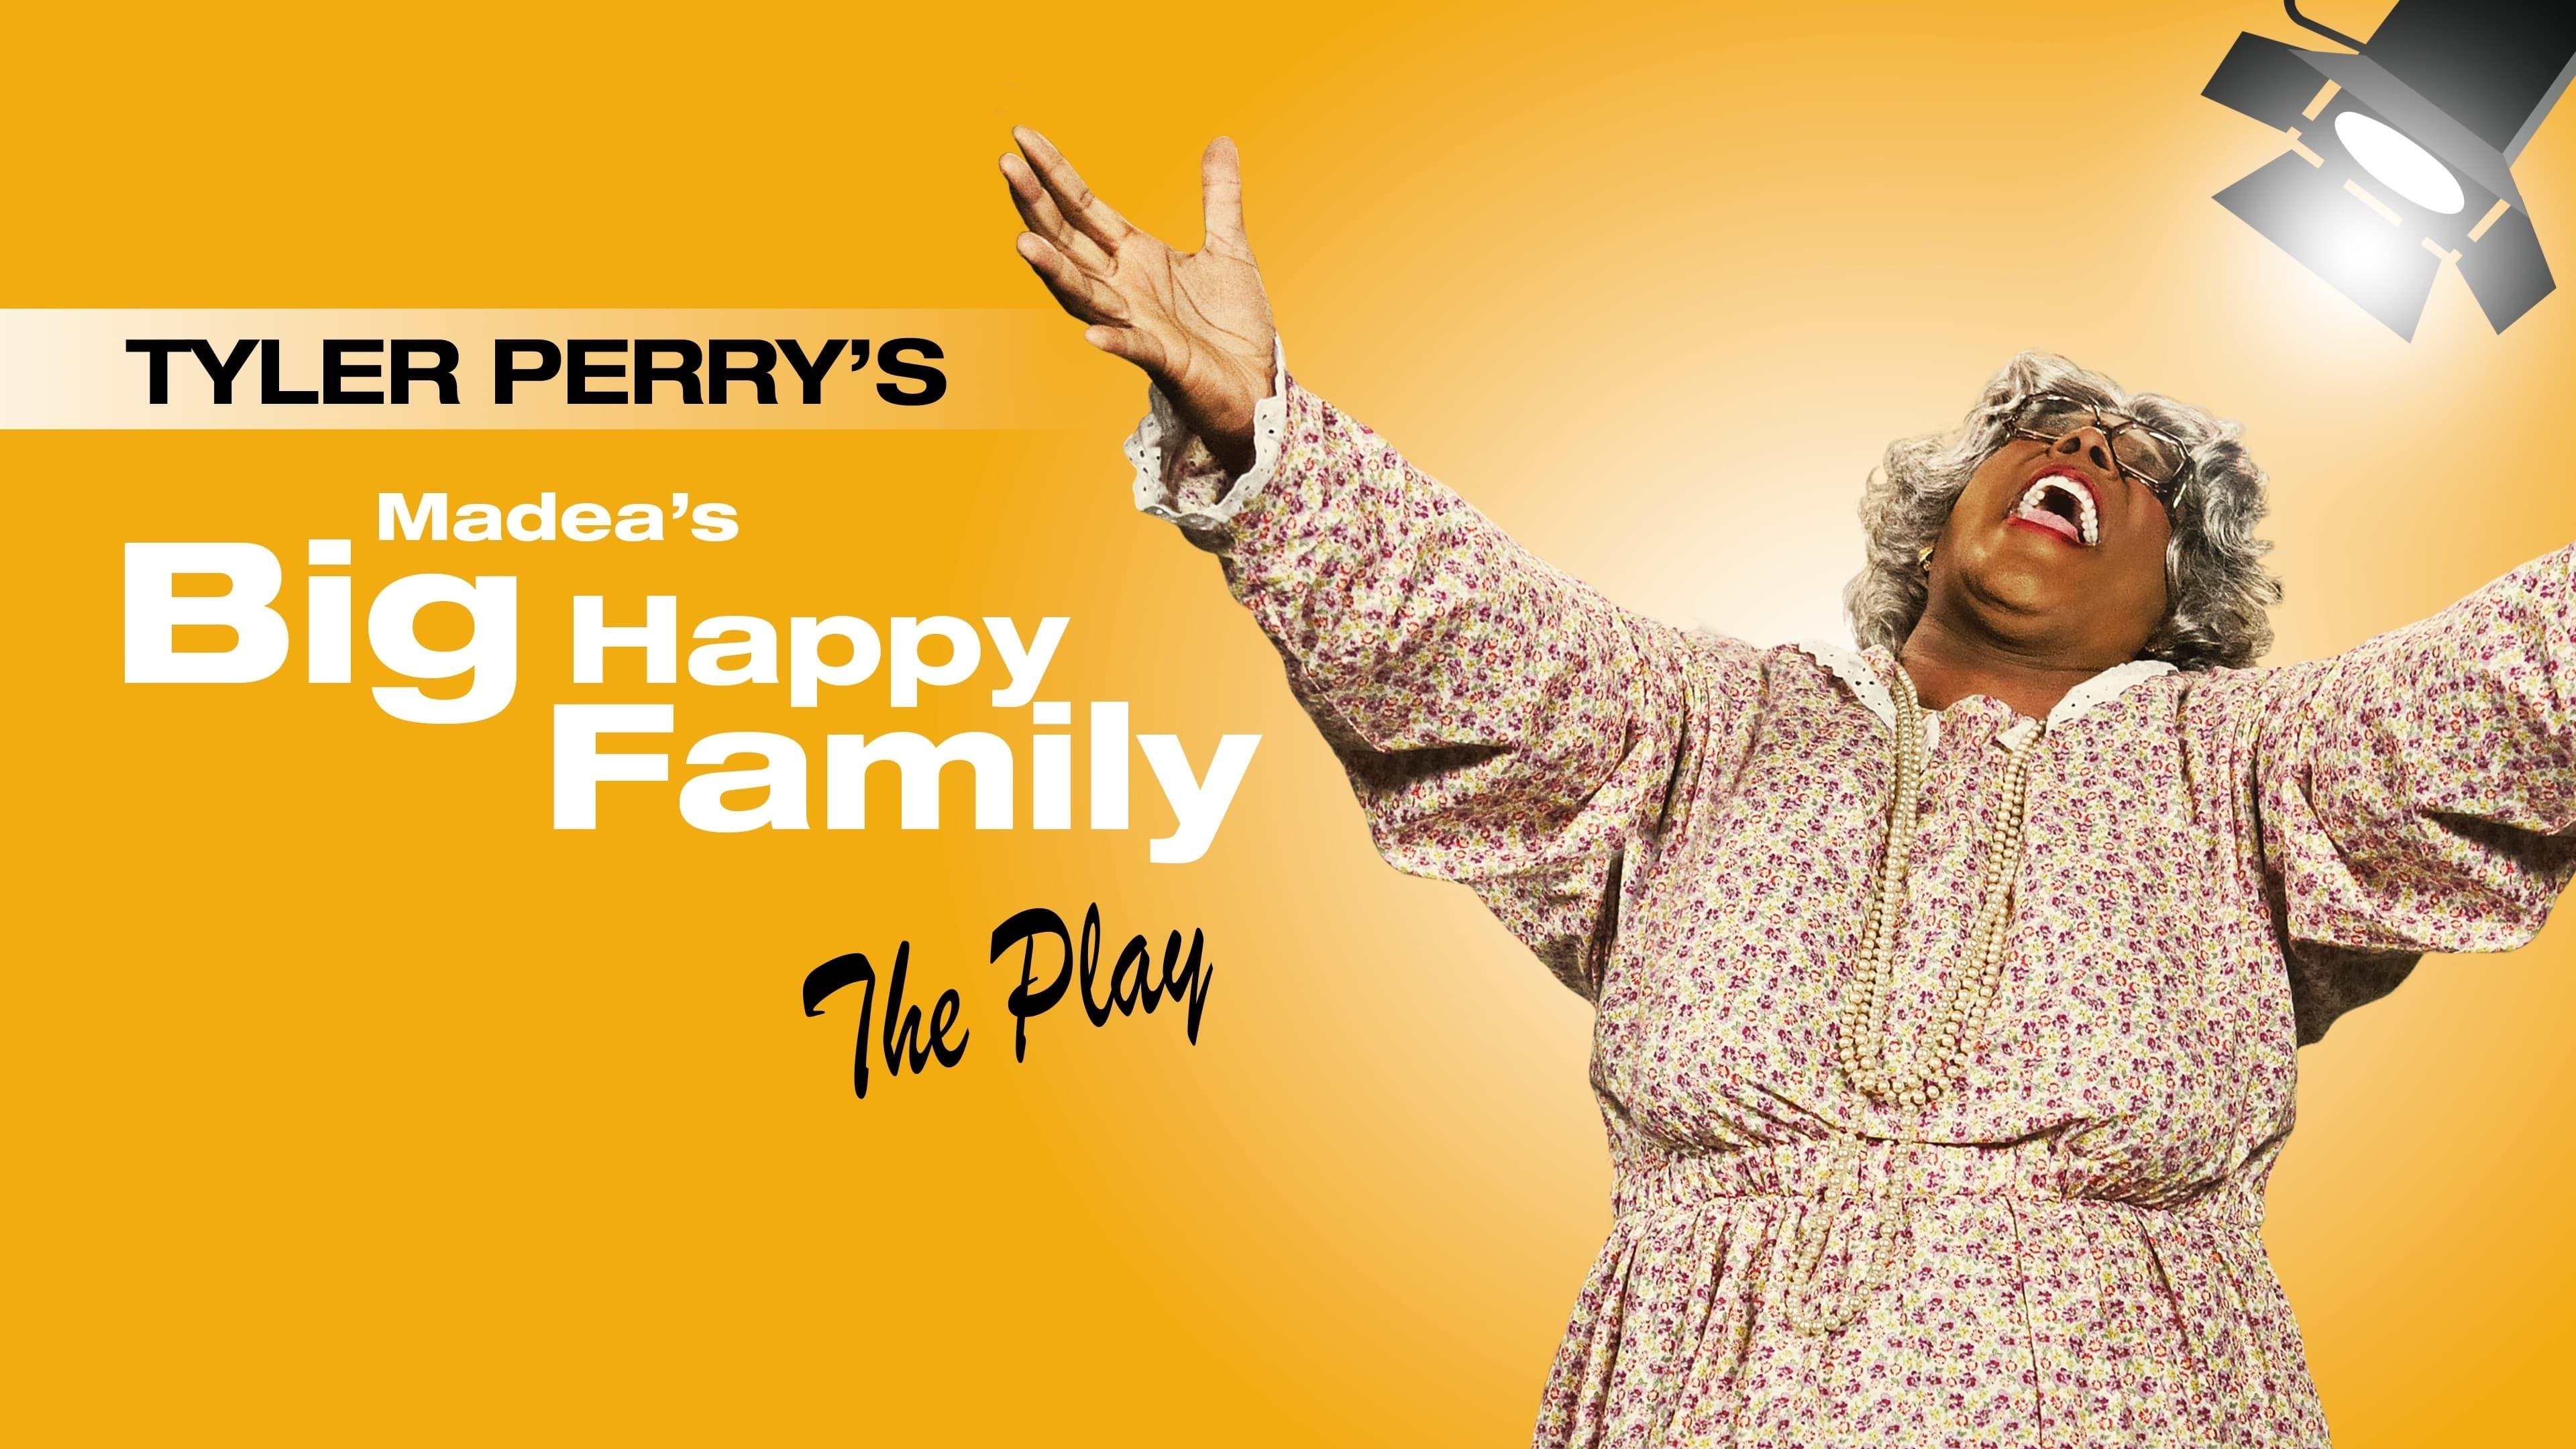 Tyler Perry's Madea's Big Happy Family - The Play backdrop